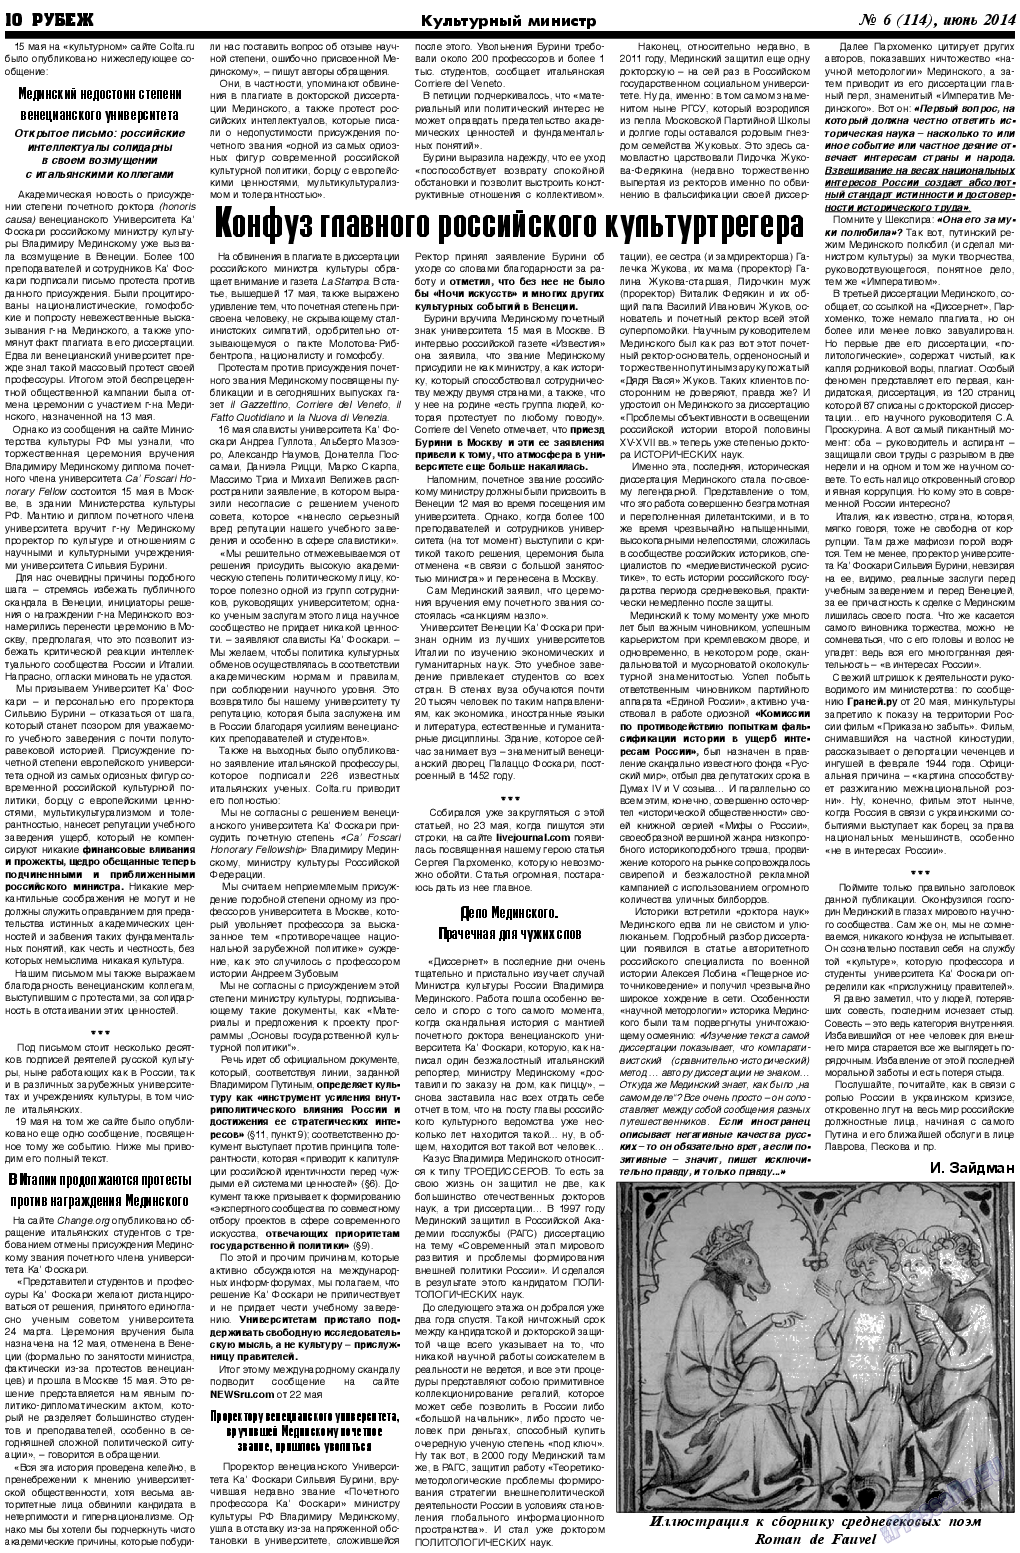 Рубеж, газета. 2014 №6 стр.10